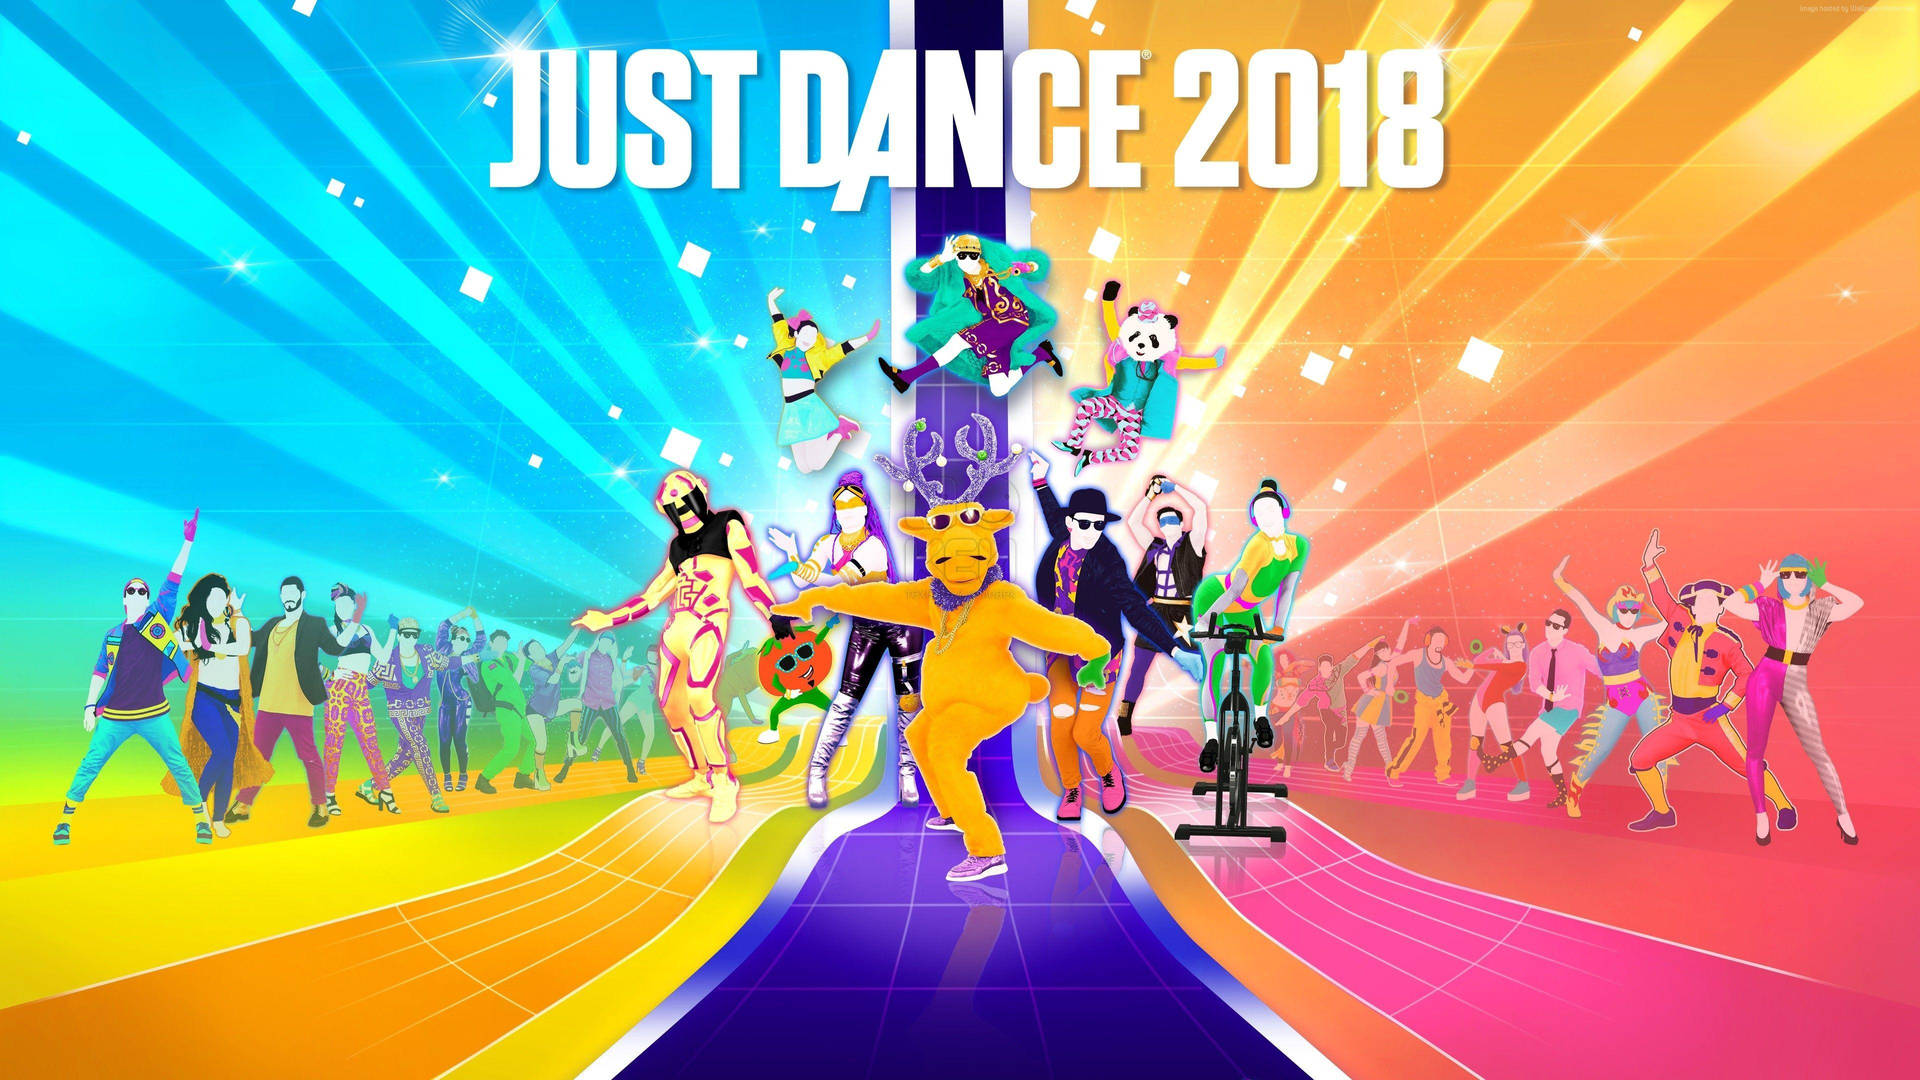 Just Dance 2018 Runway Poster Wallpaper